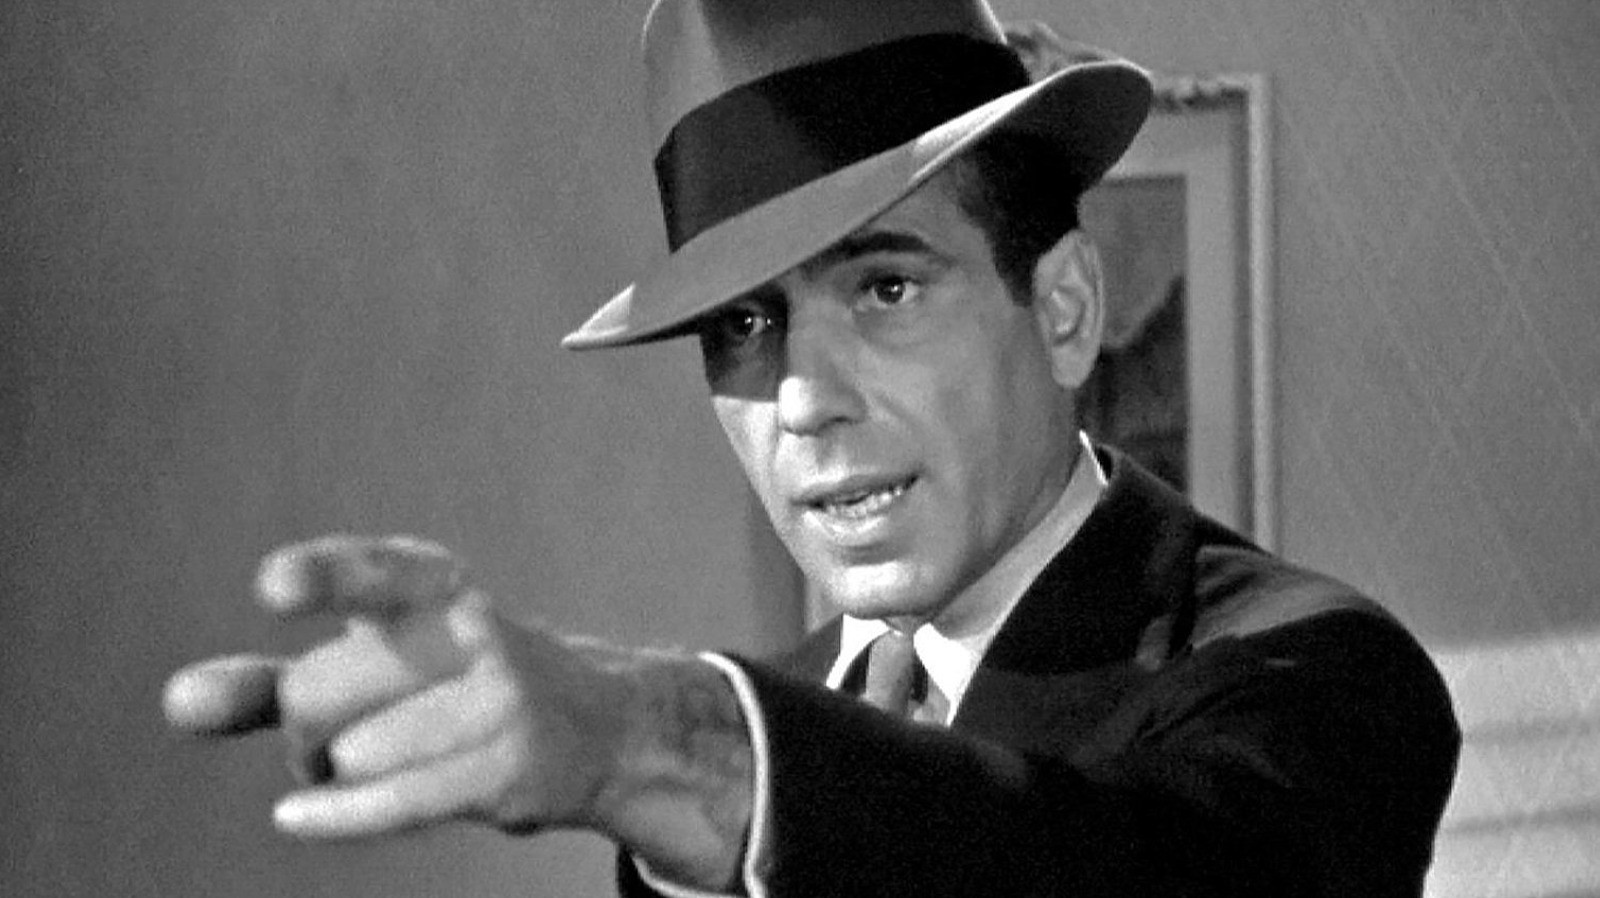 Hollywood legend Humphrey Bogart